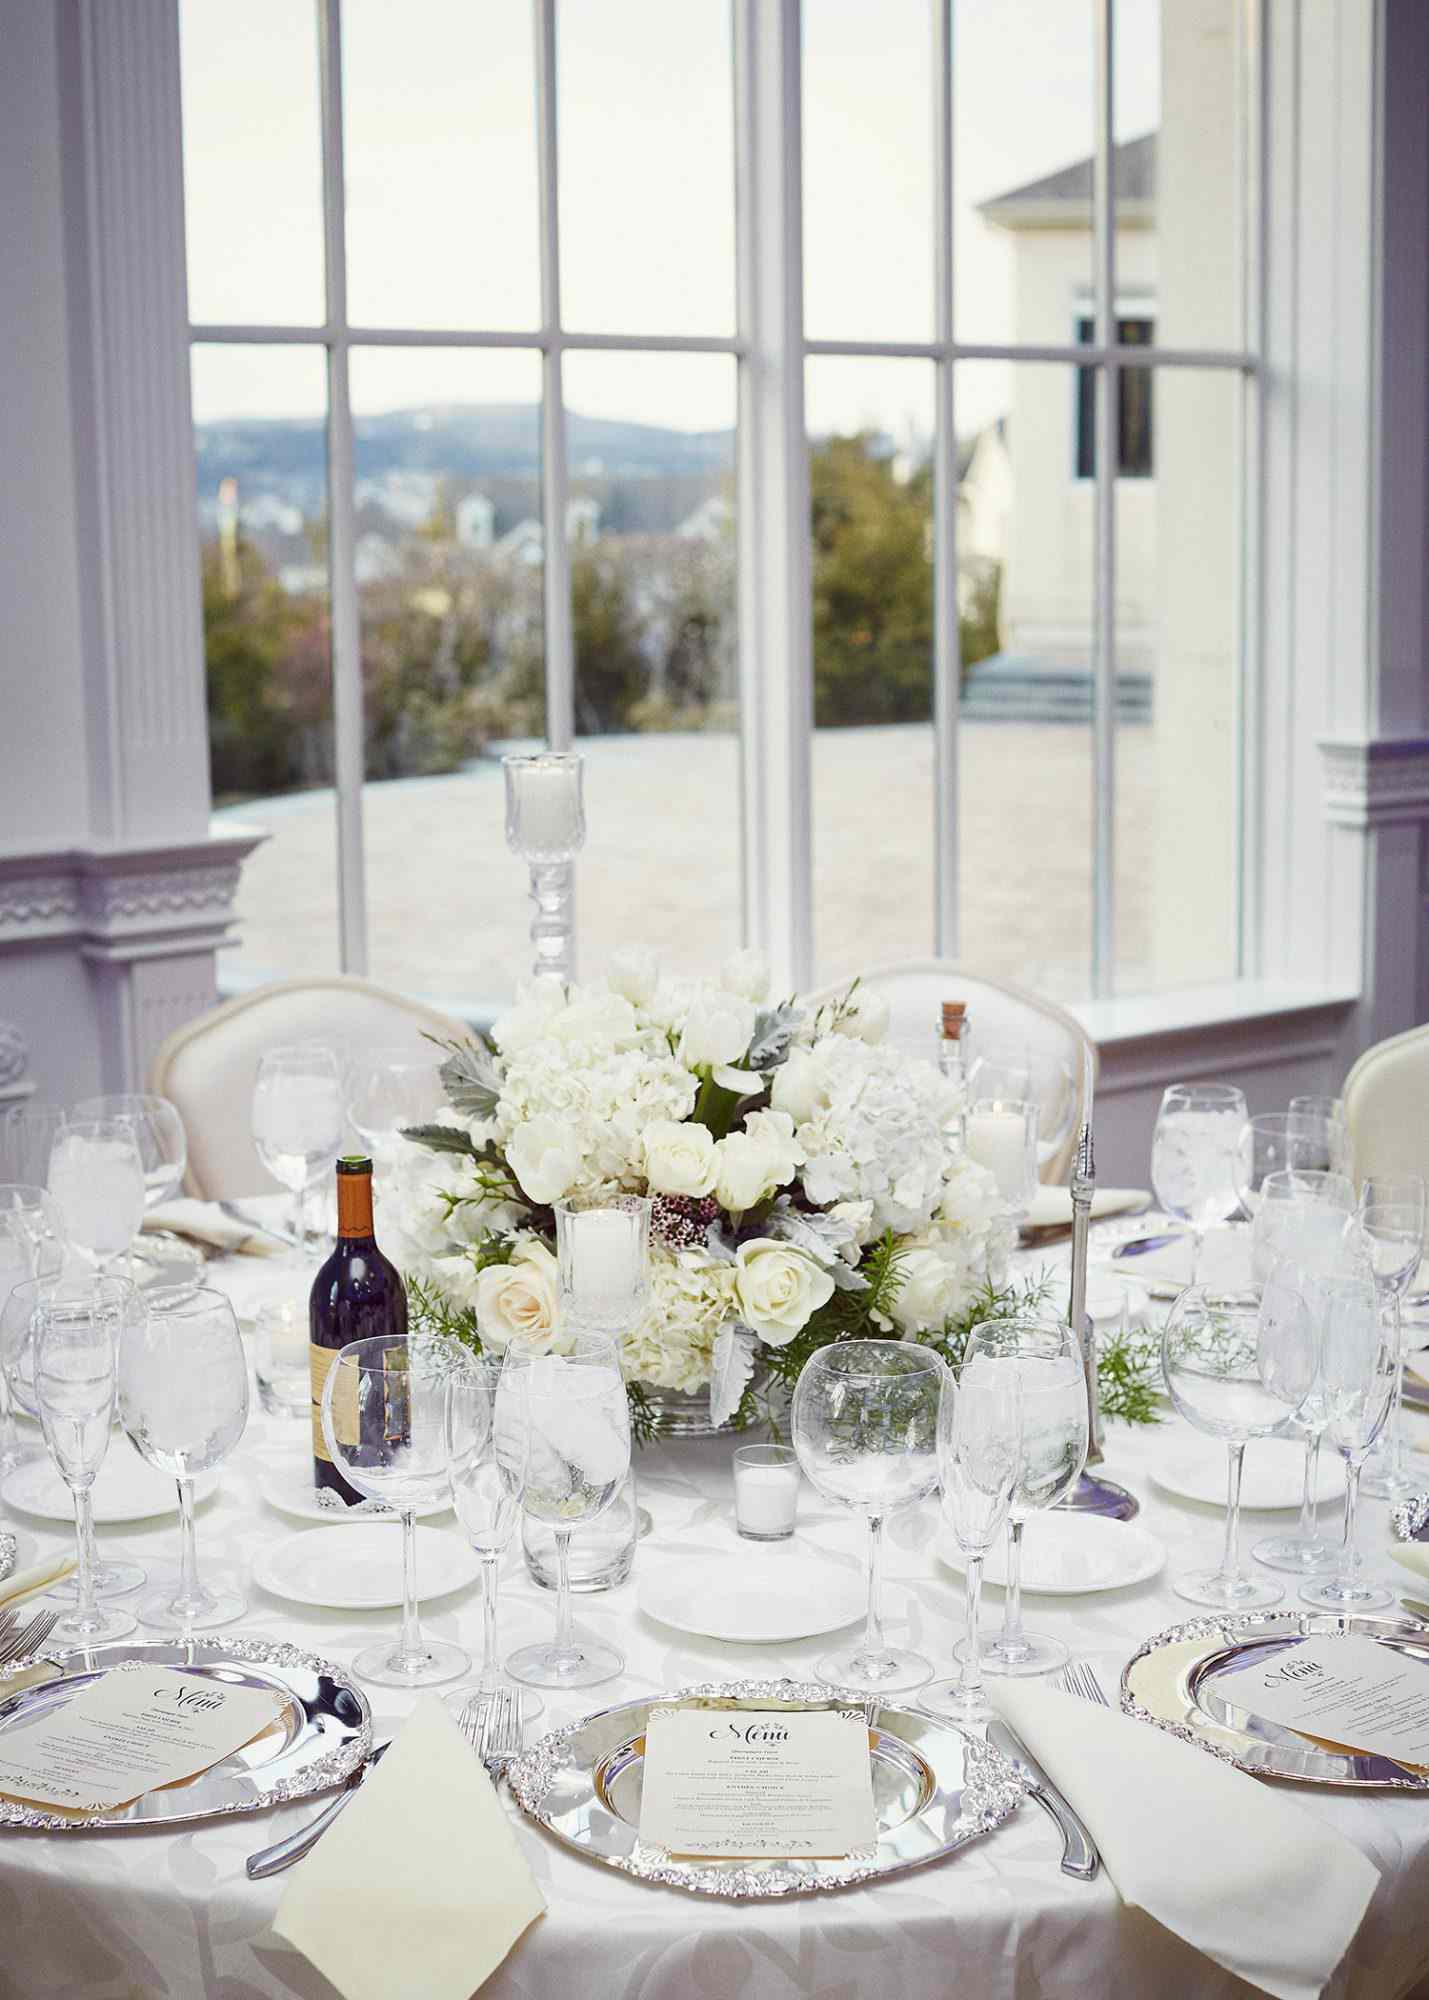 shqipe zenel wedding table centerpiece white